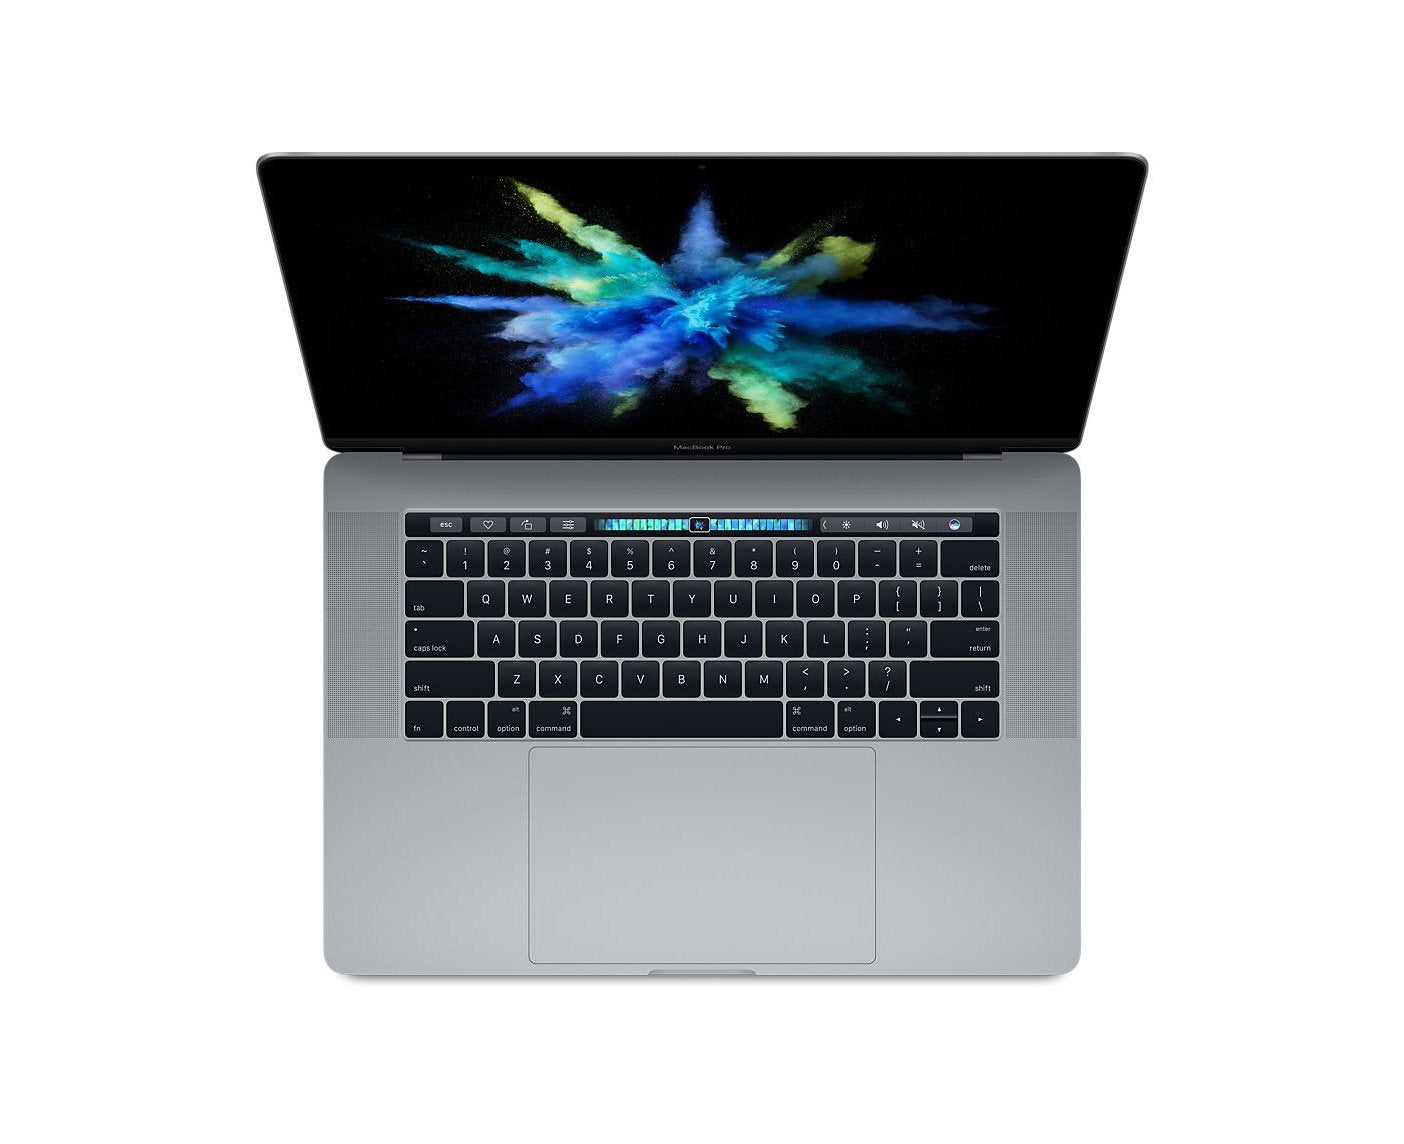 Macbook Pro 15-inch (Touchbar) - 2017 - i7 - Space Grey